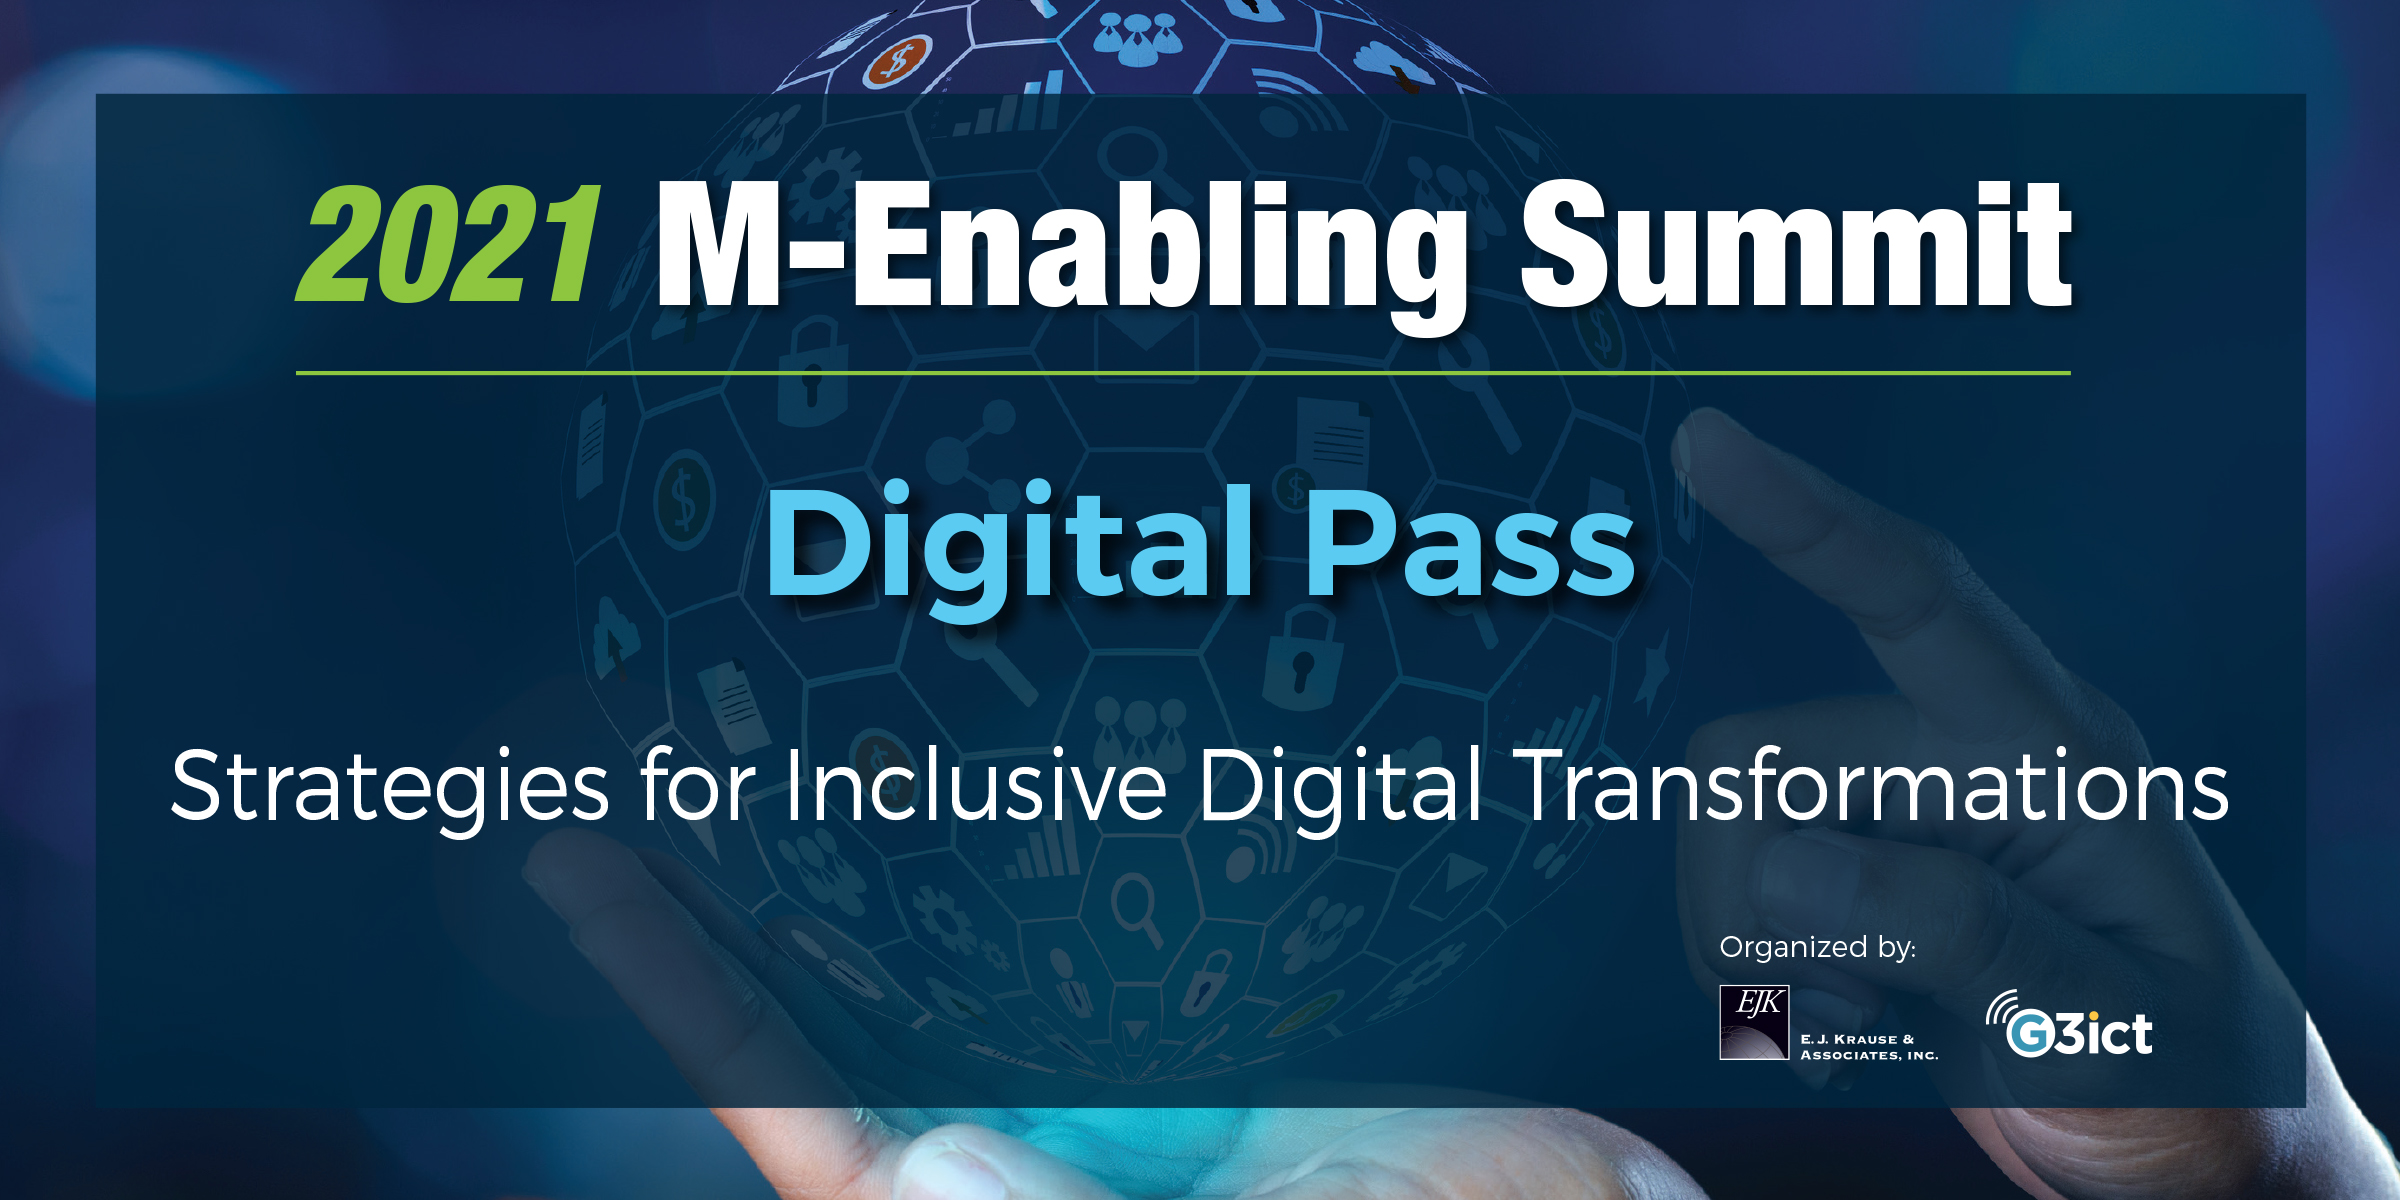 M-Enabling Summit Digital Pass 2021 MESOCT